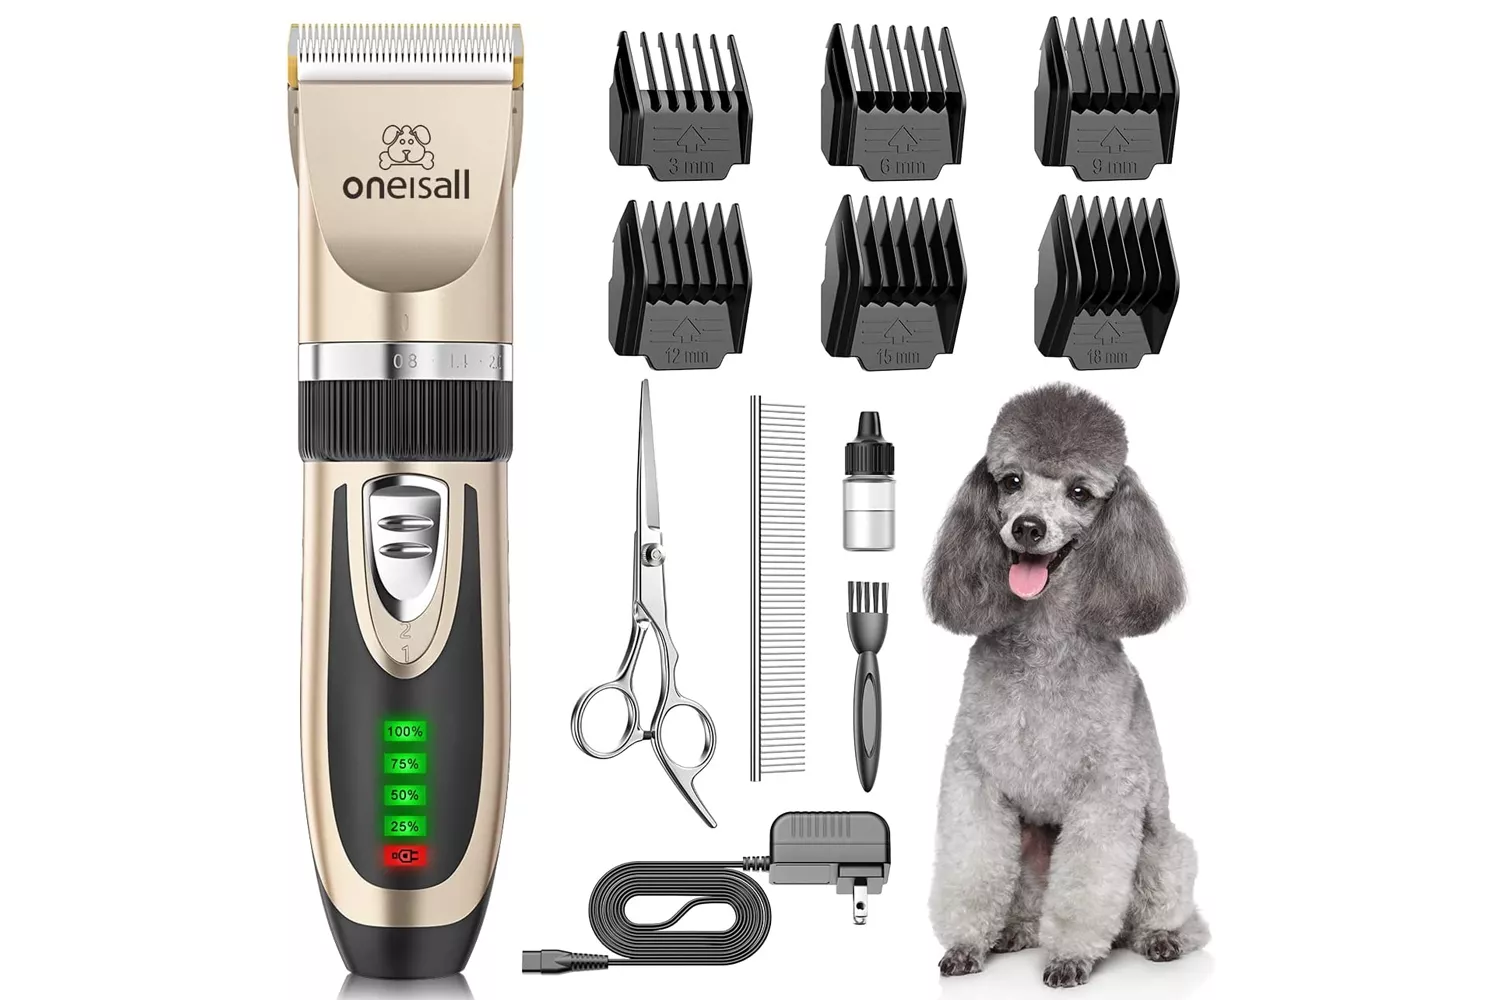 oneisall Cordless Dog Grooming Kit